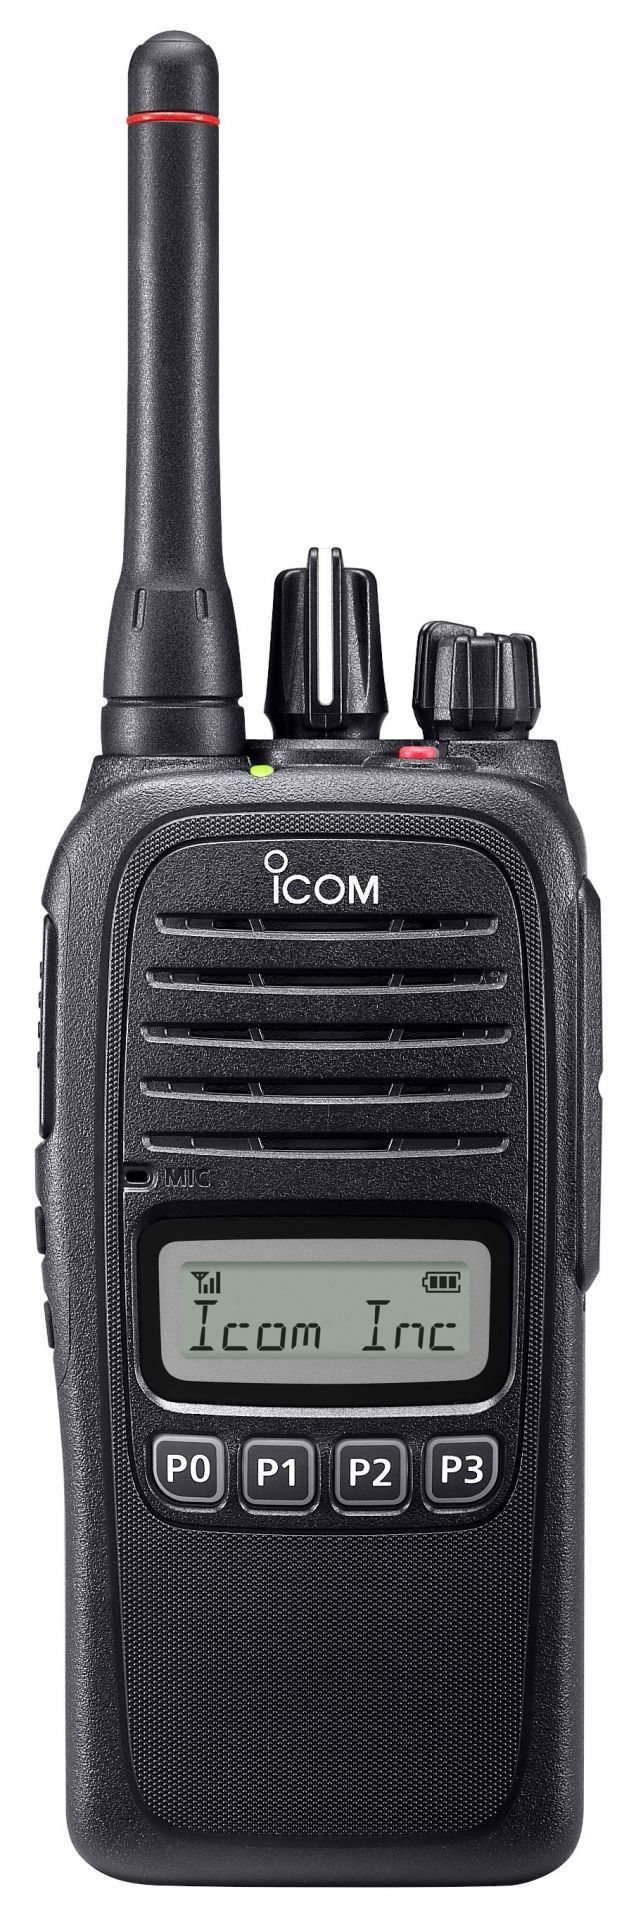 Talkie walkie professionnel analogique avec pti icom ic-f1000s_0